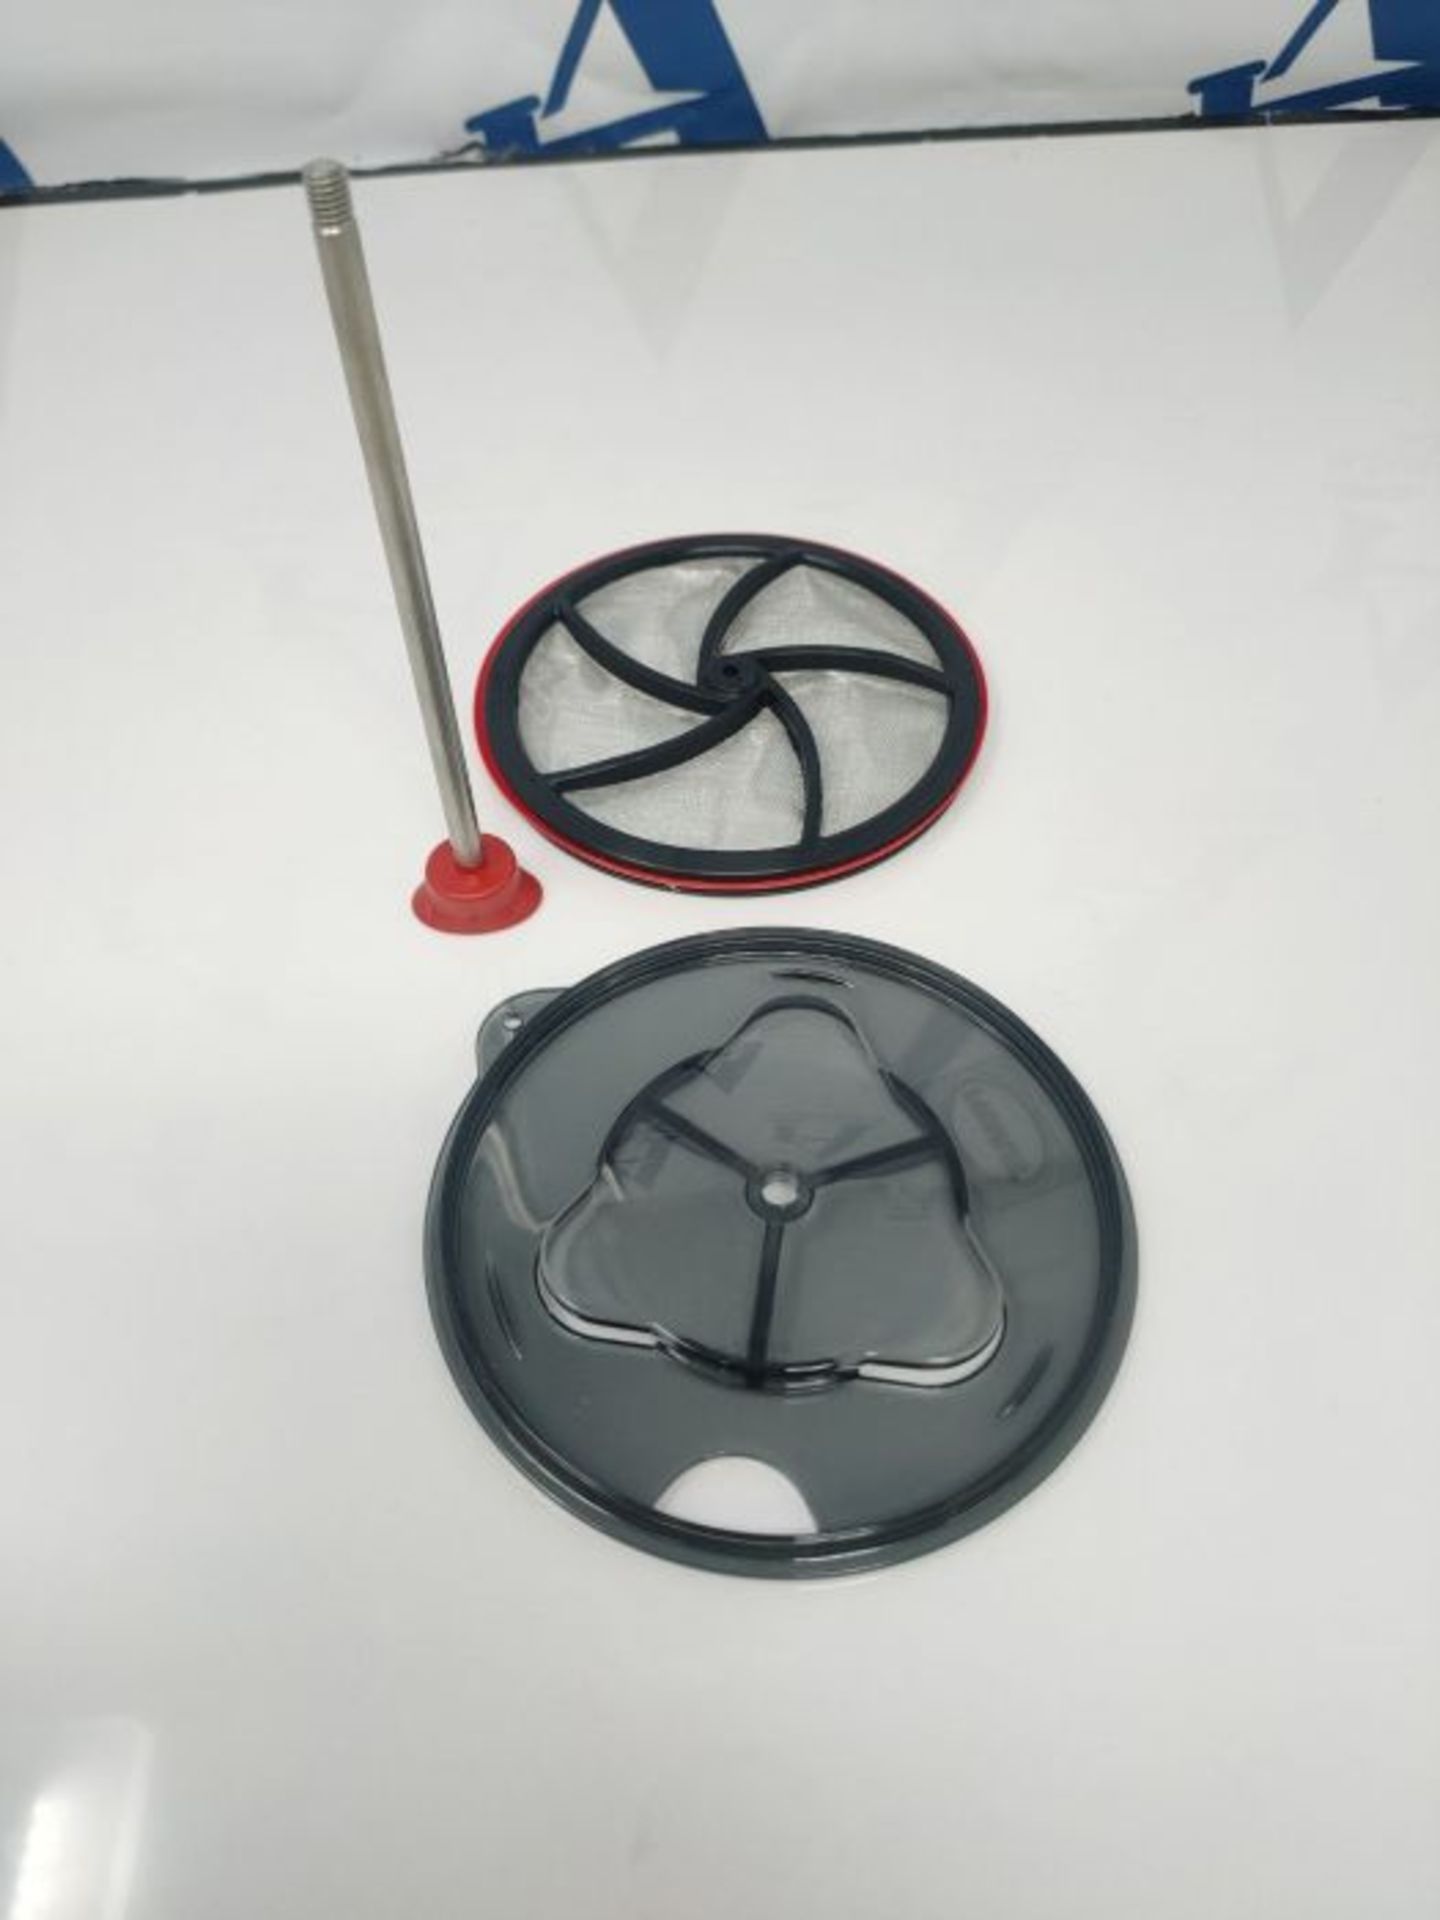 Primus Unisex - Adult Lite+ Cooker Set, Multi-Colour, One Size - Image 3 of 3